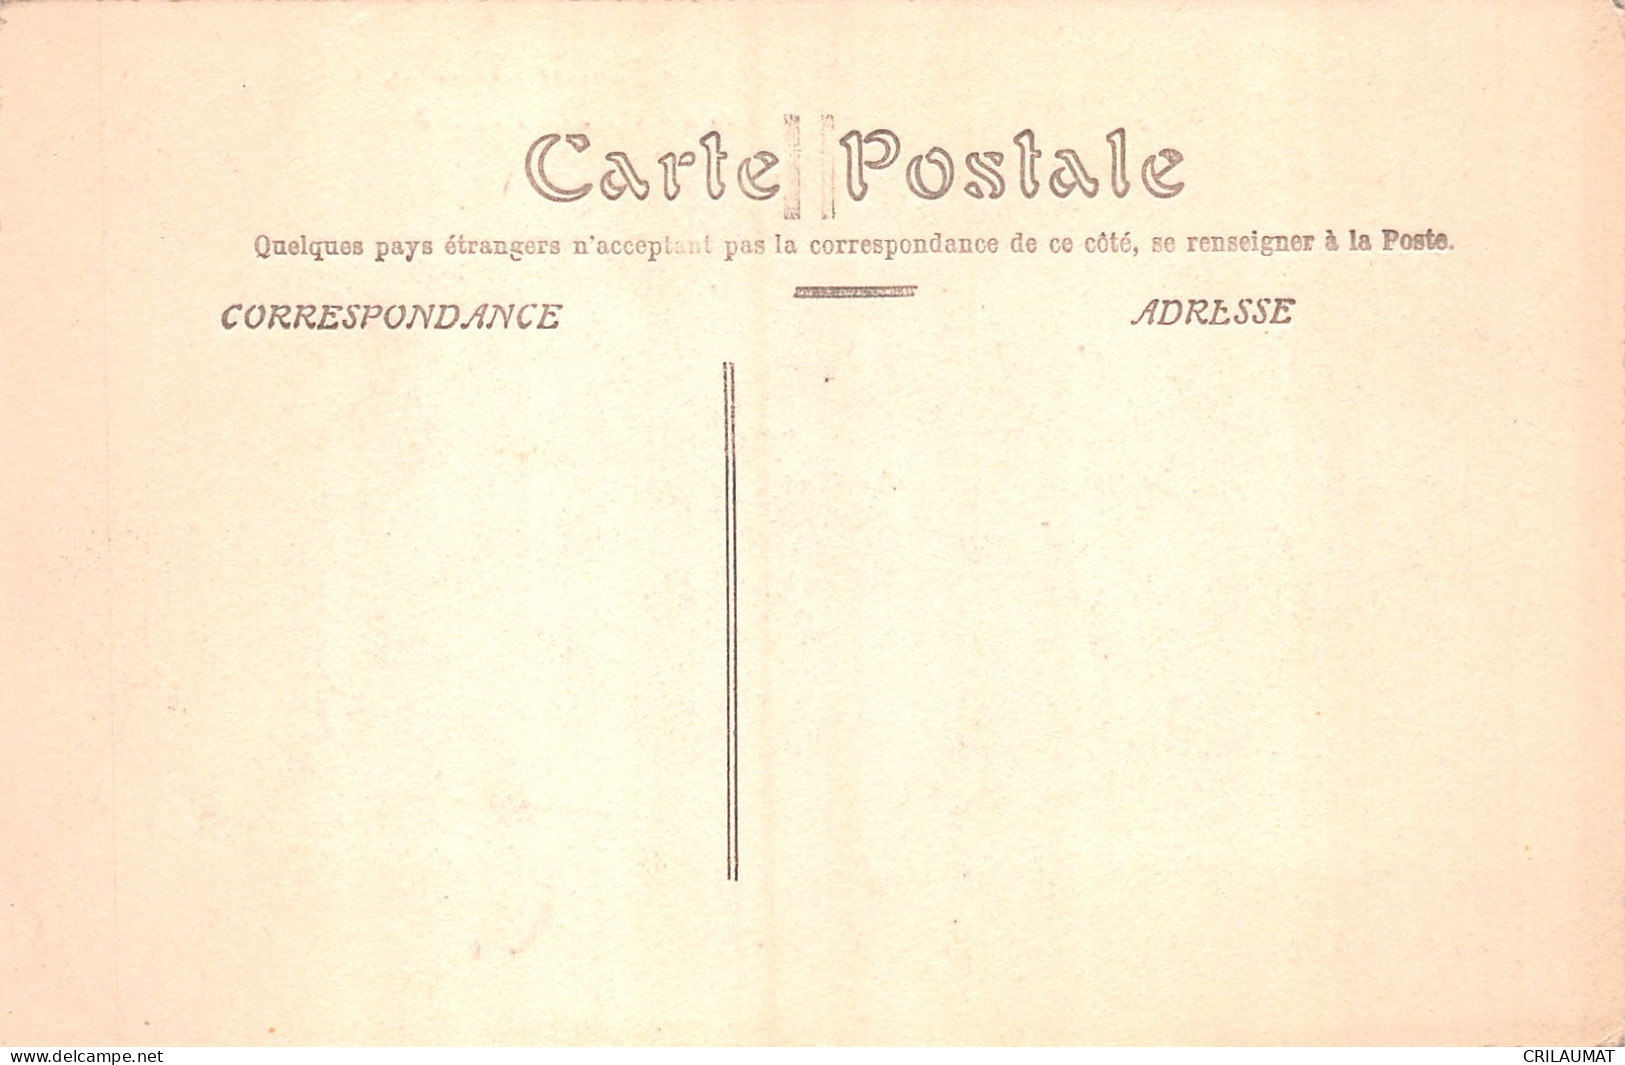 75-PARIS INONDATIONS 1910 GARE D ORSAY-N°T5168-C/0315 - Inondations De 1910